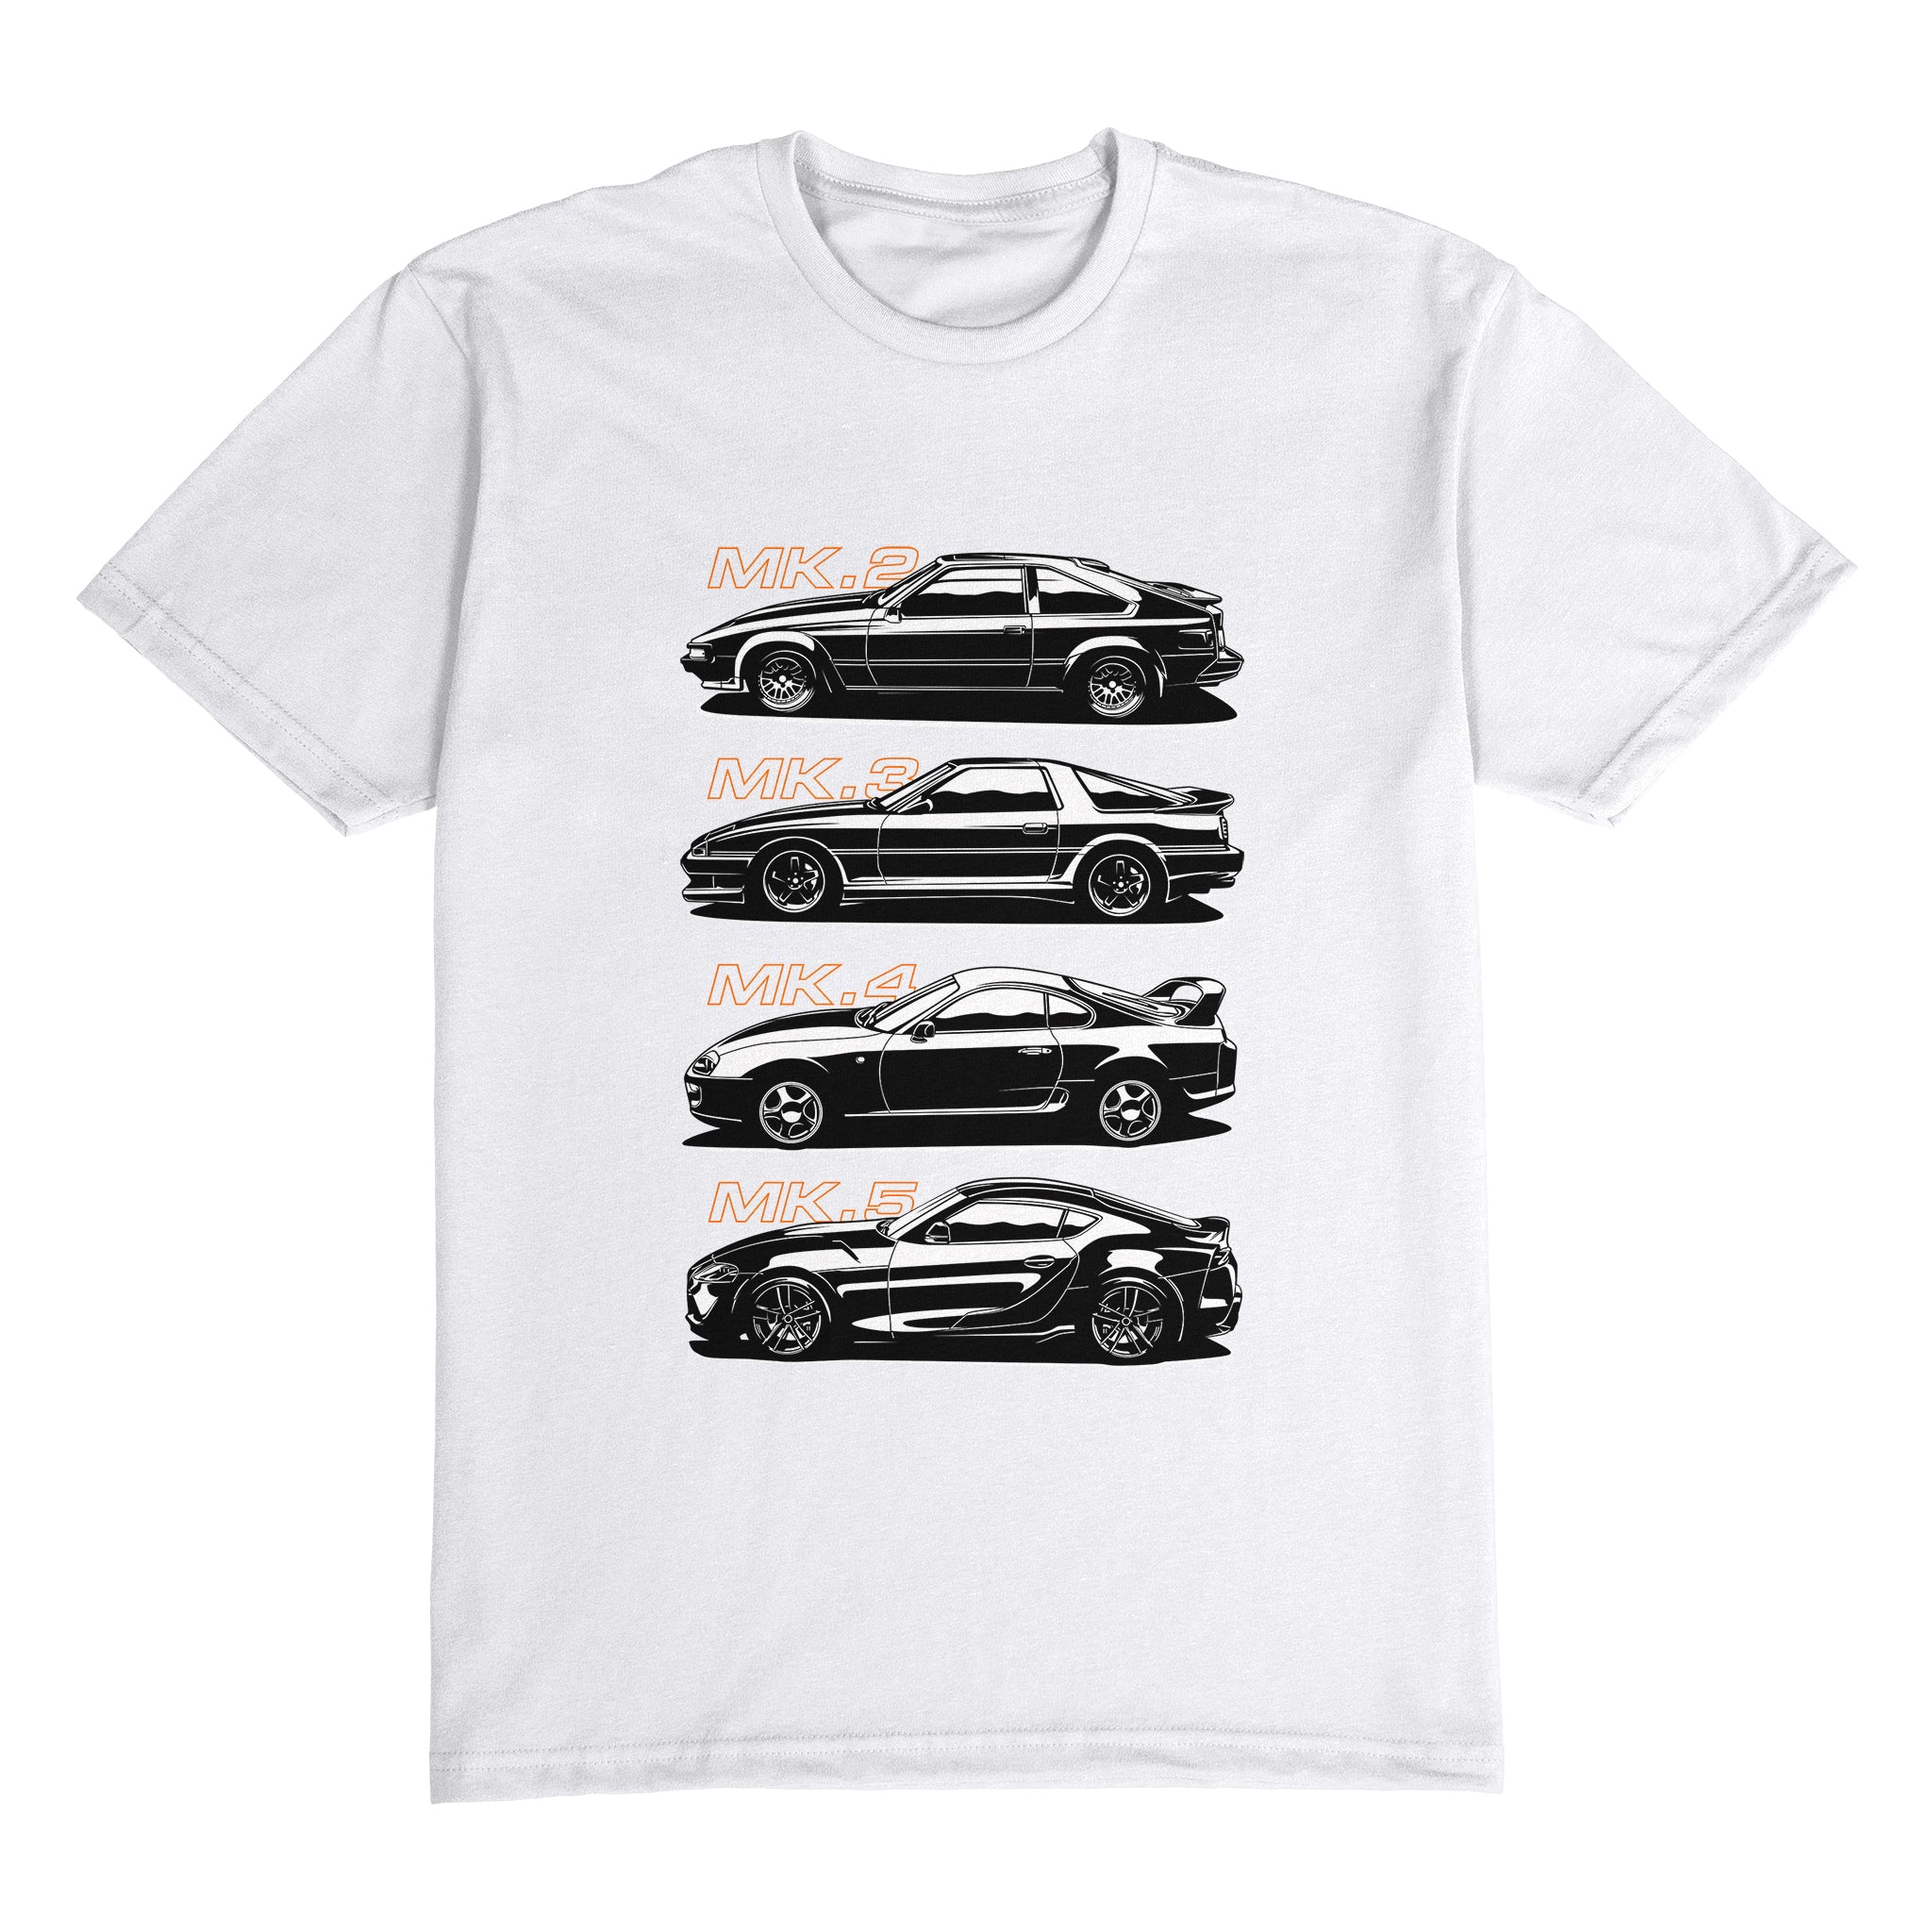 Toyota Supra History MK2, MK3, MK4, MK5 Car t-shirt in White